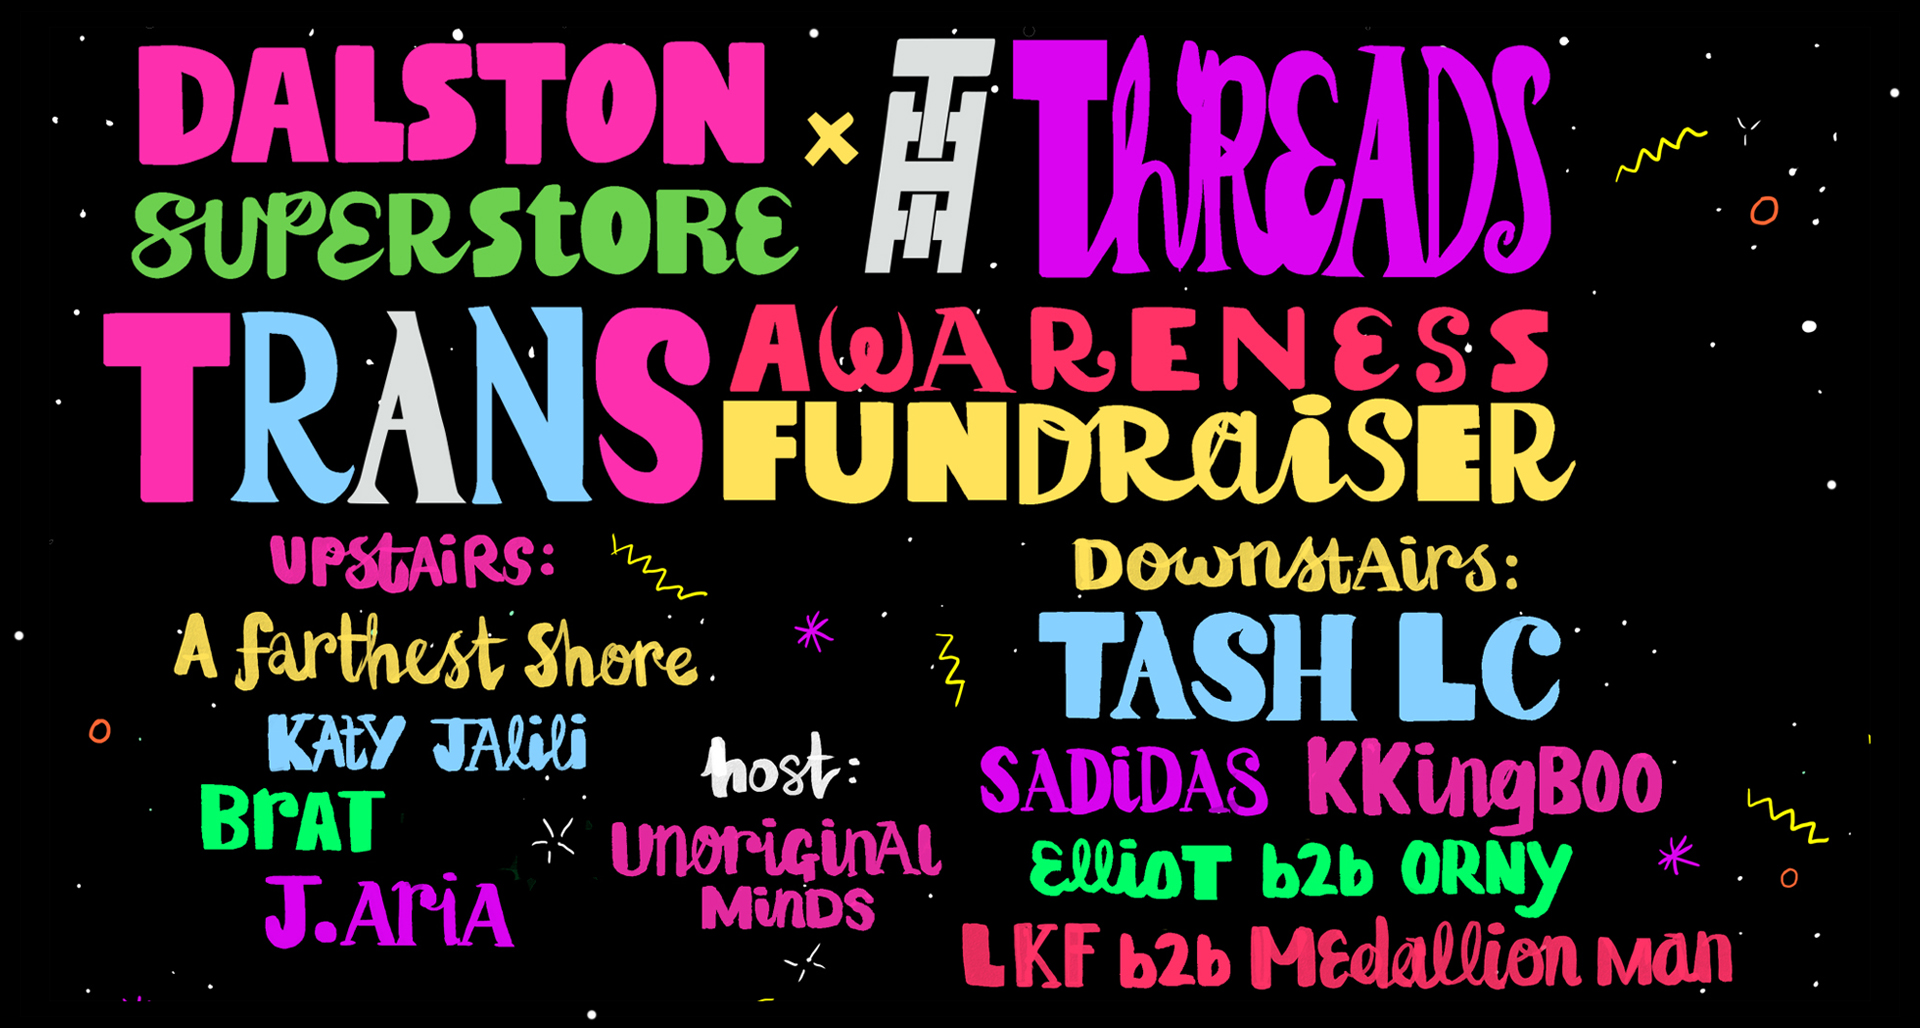 Trans Awareness Fundraiser (Dalston Superstore X Threads)